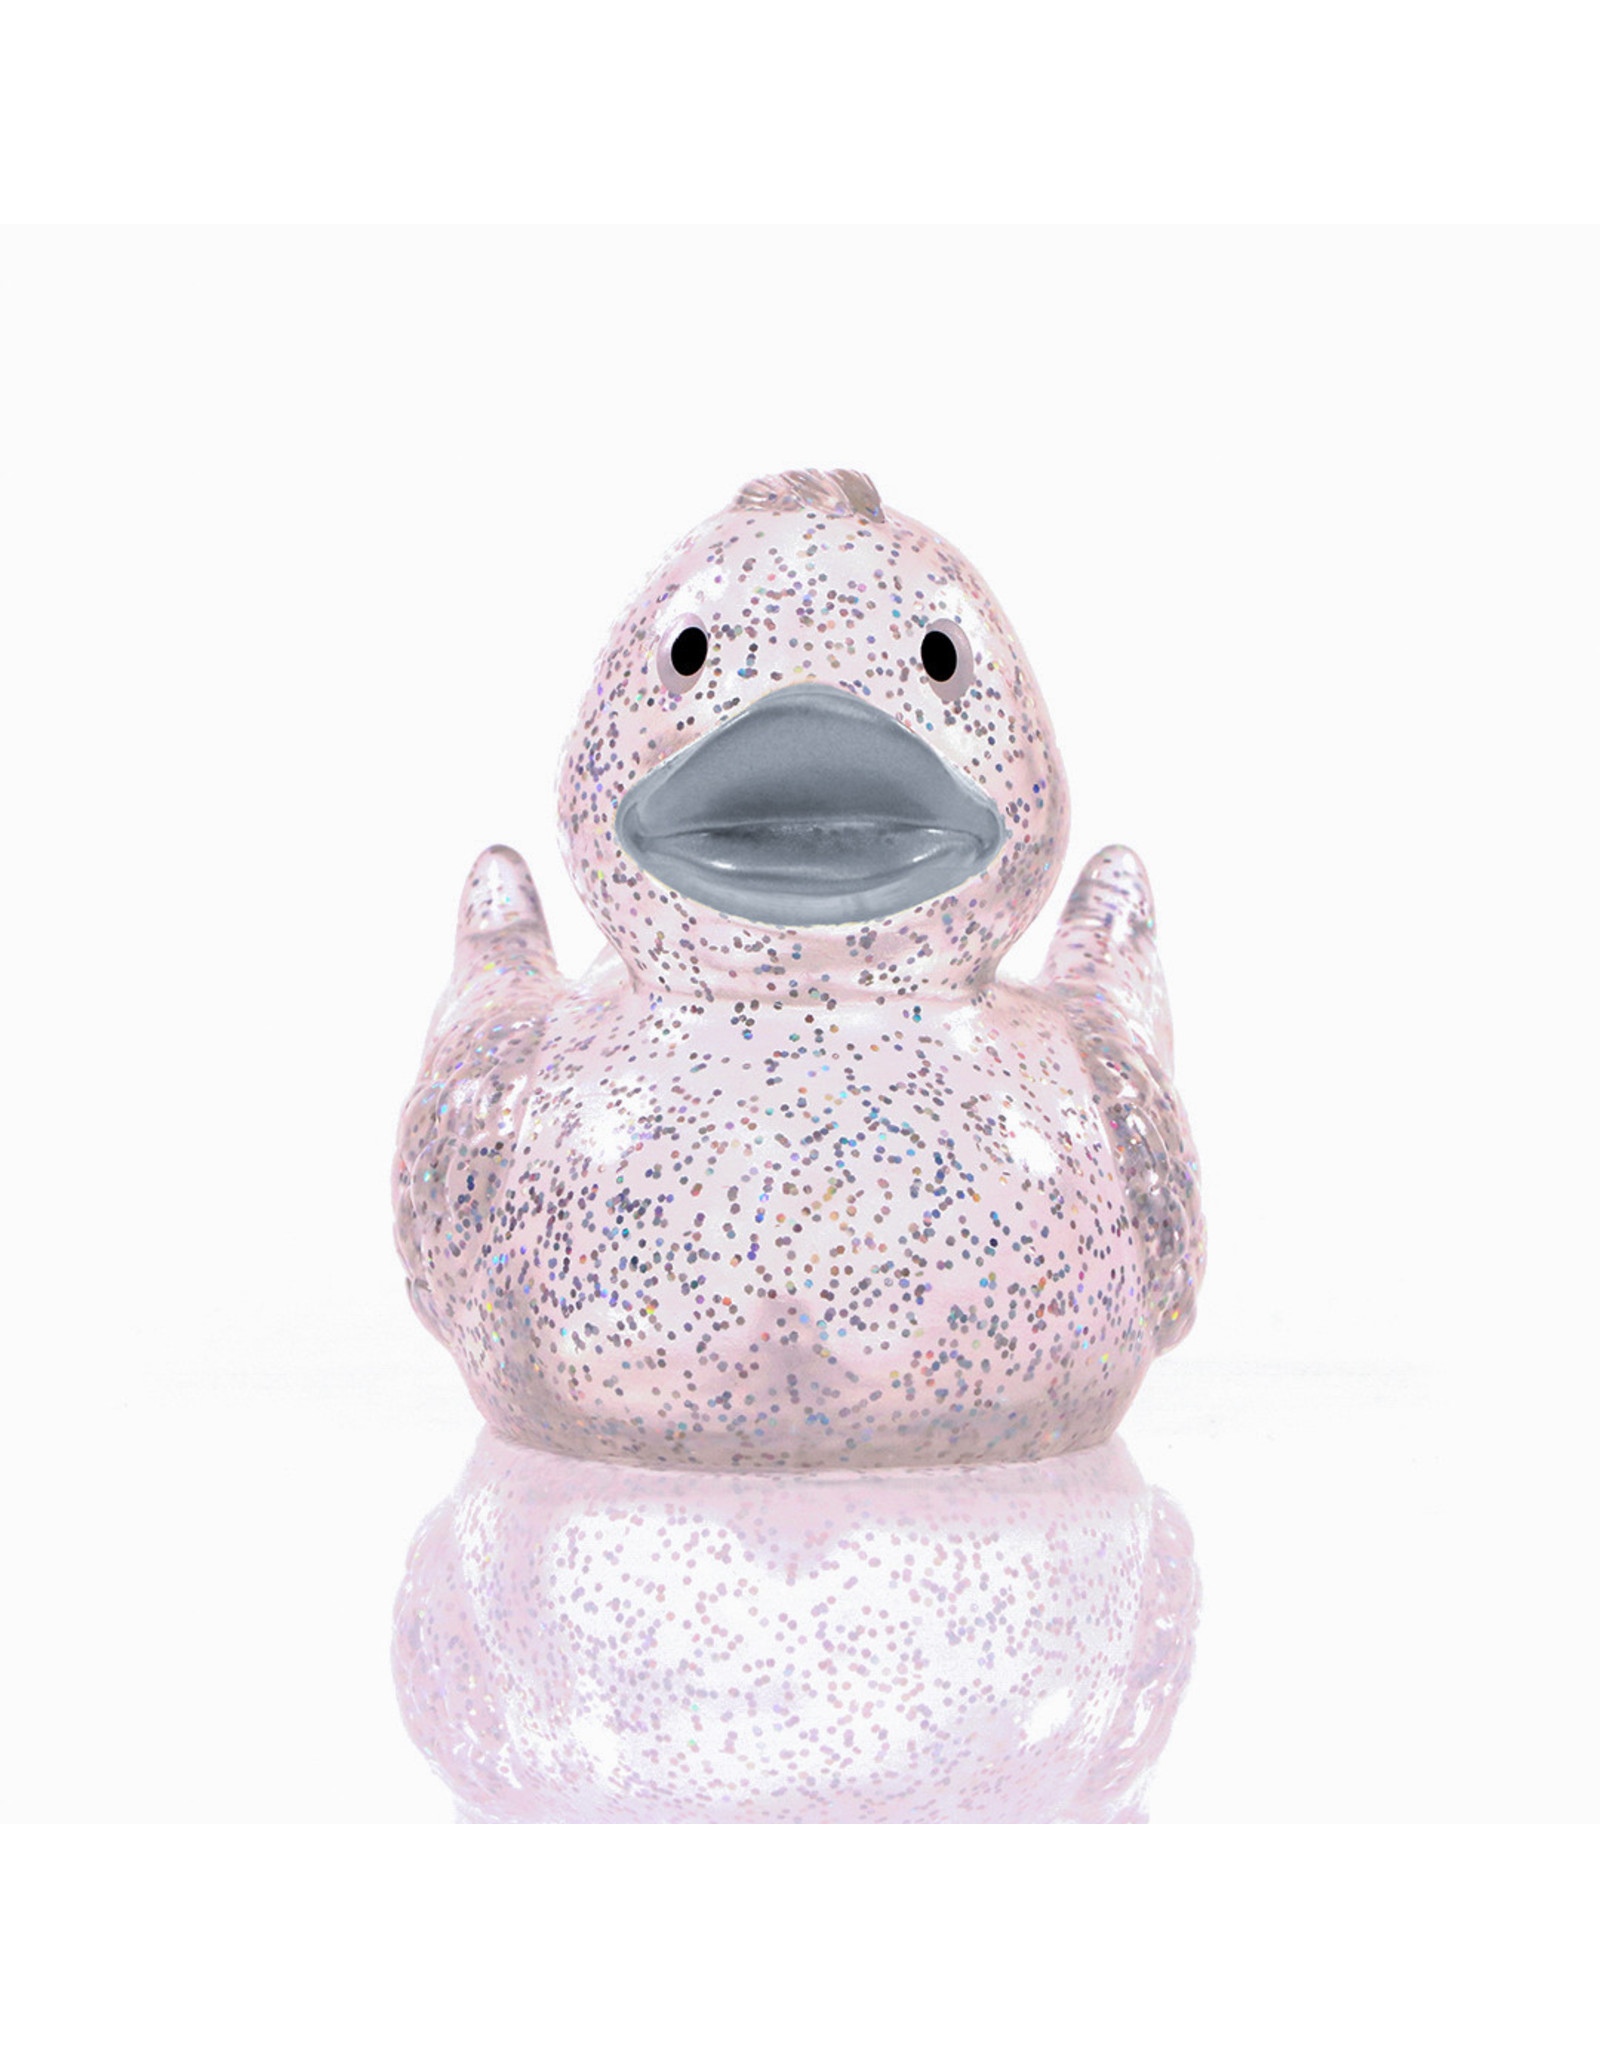 Glitter Rubber Duck with Silver Beak